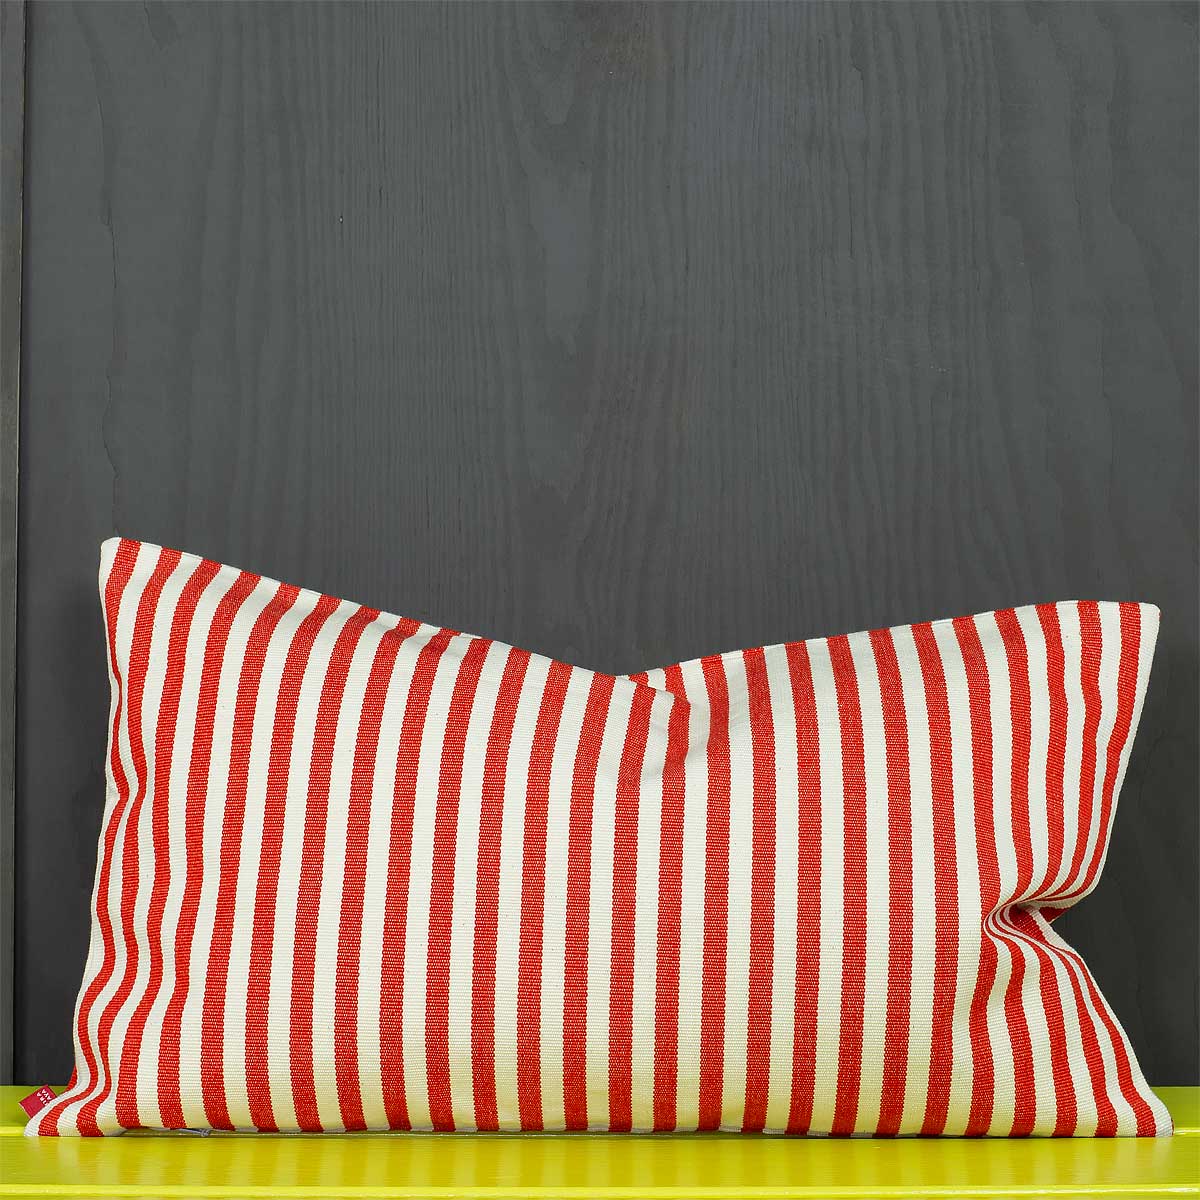 JOSEFINA Cushion cover 30x50, white/red